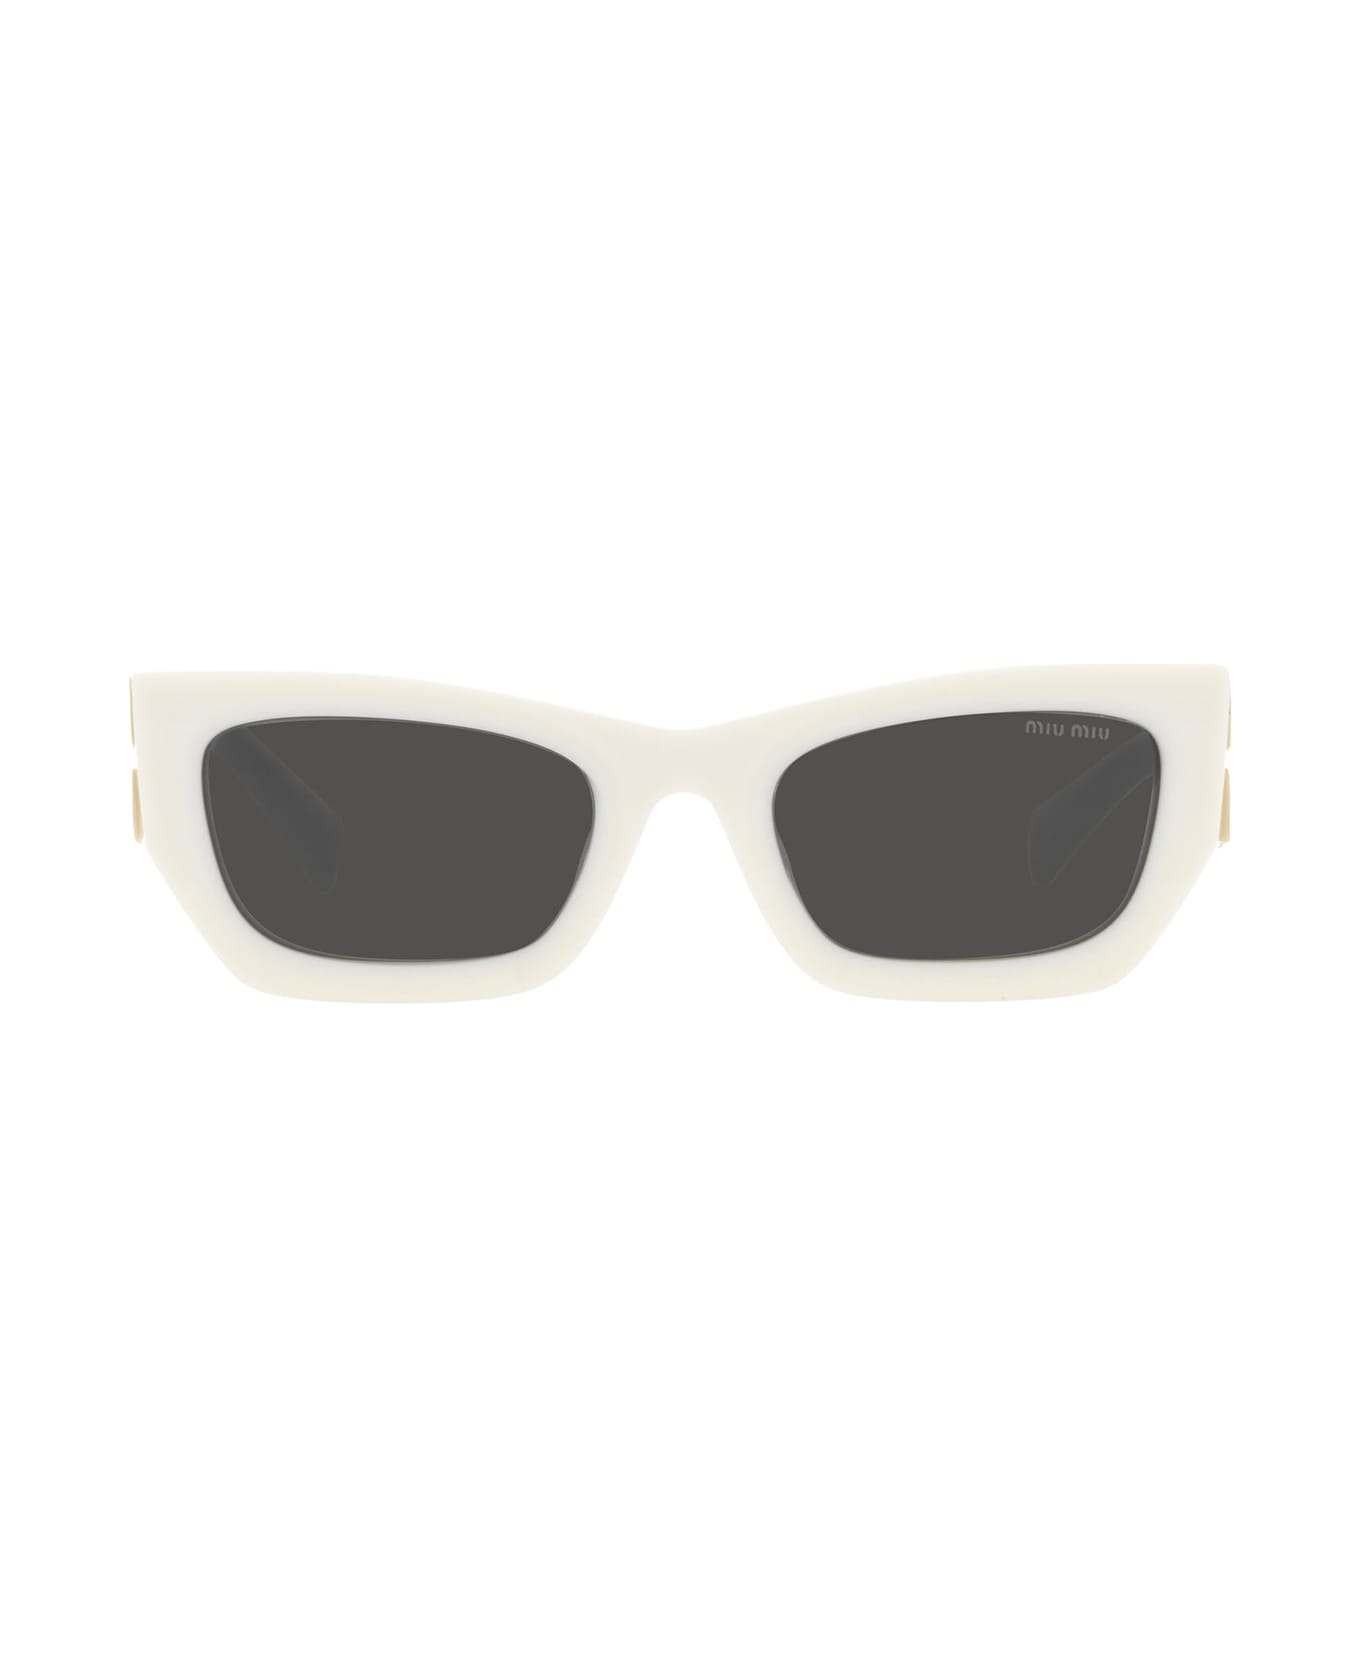 Miu Miu Eyewear Mu 09ws White Sunglasses - White